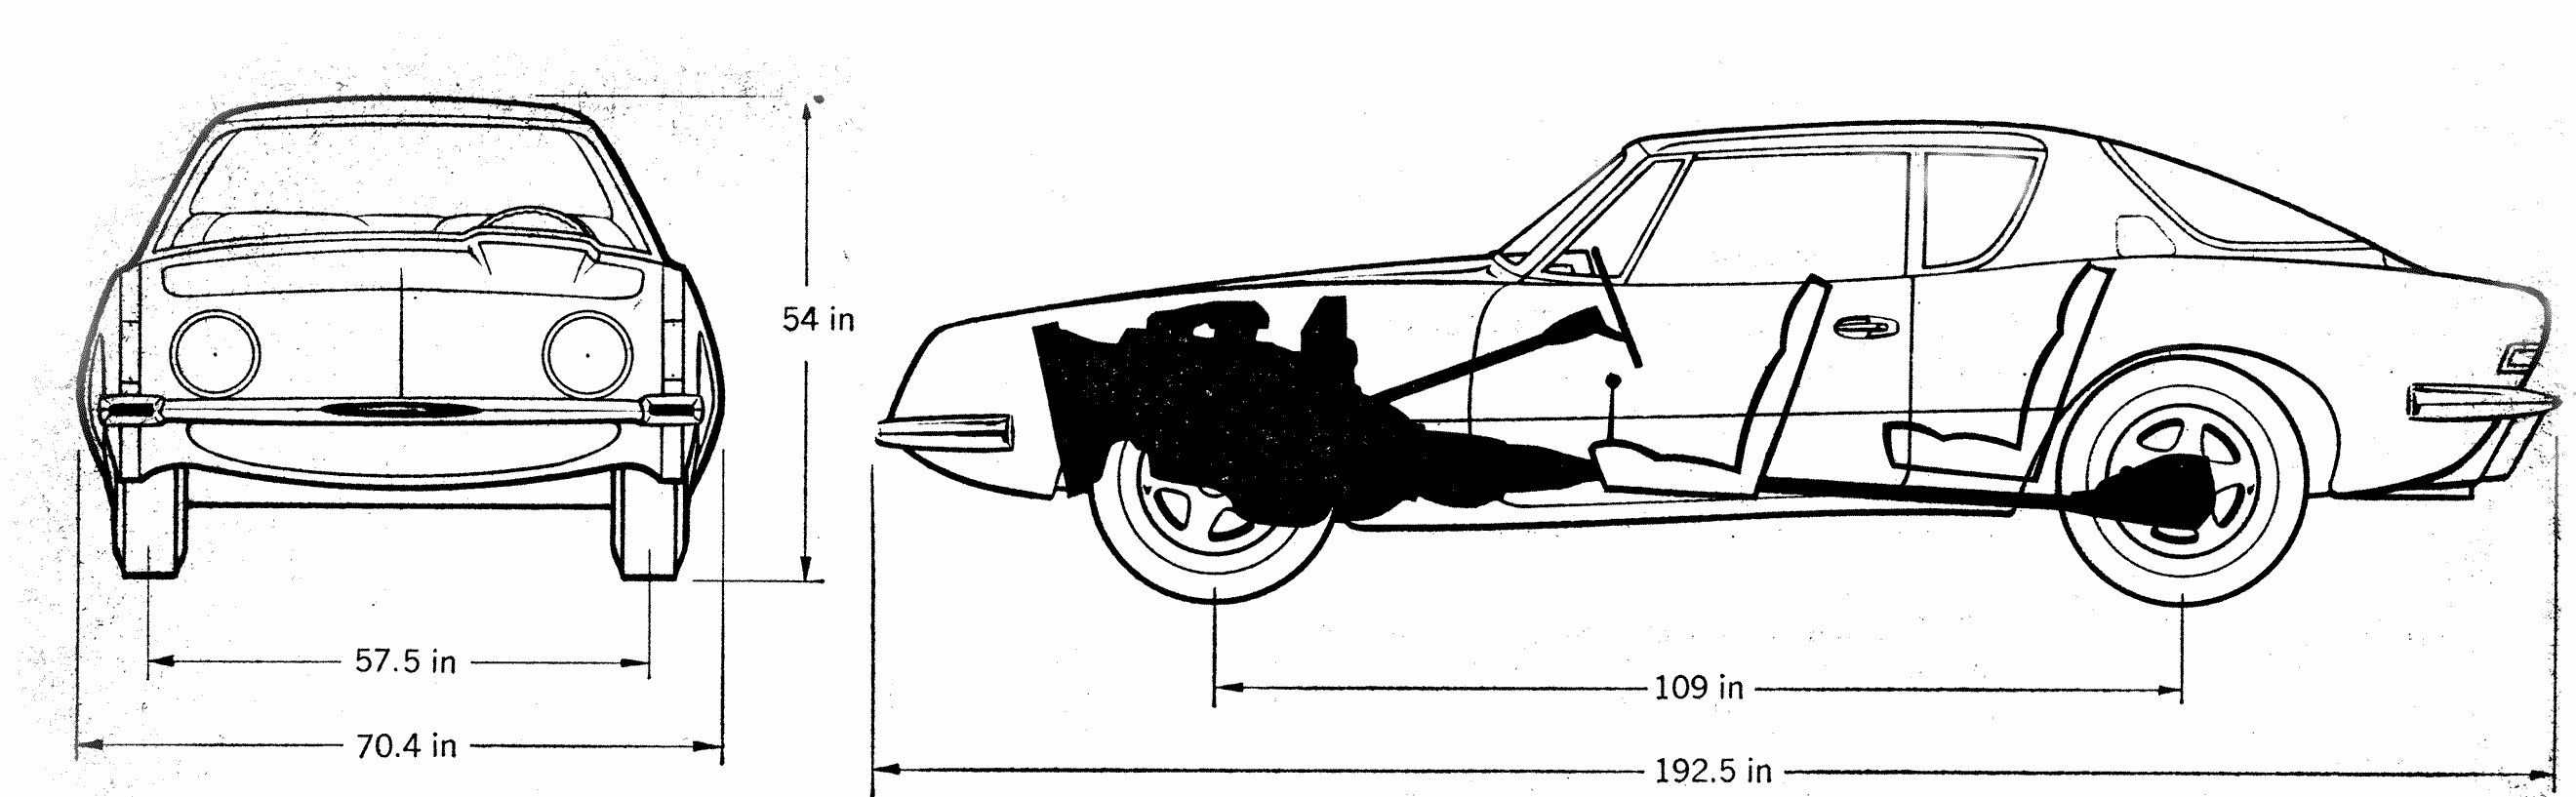 Studebaker Avanti blueprint